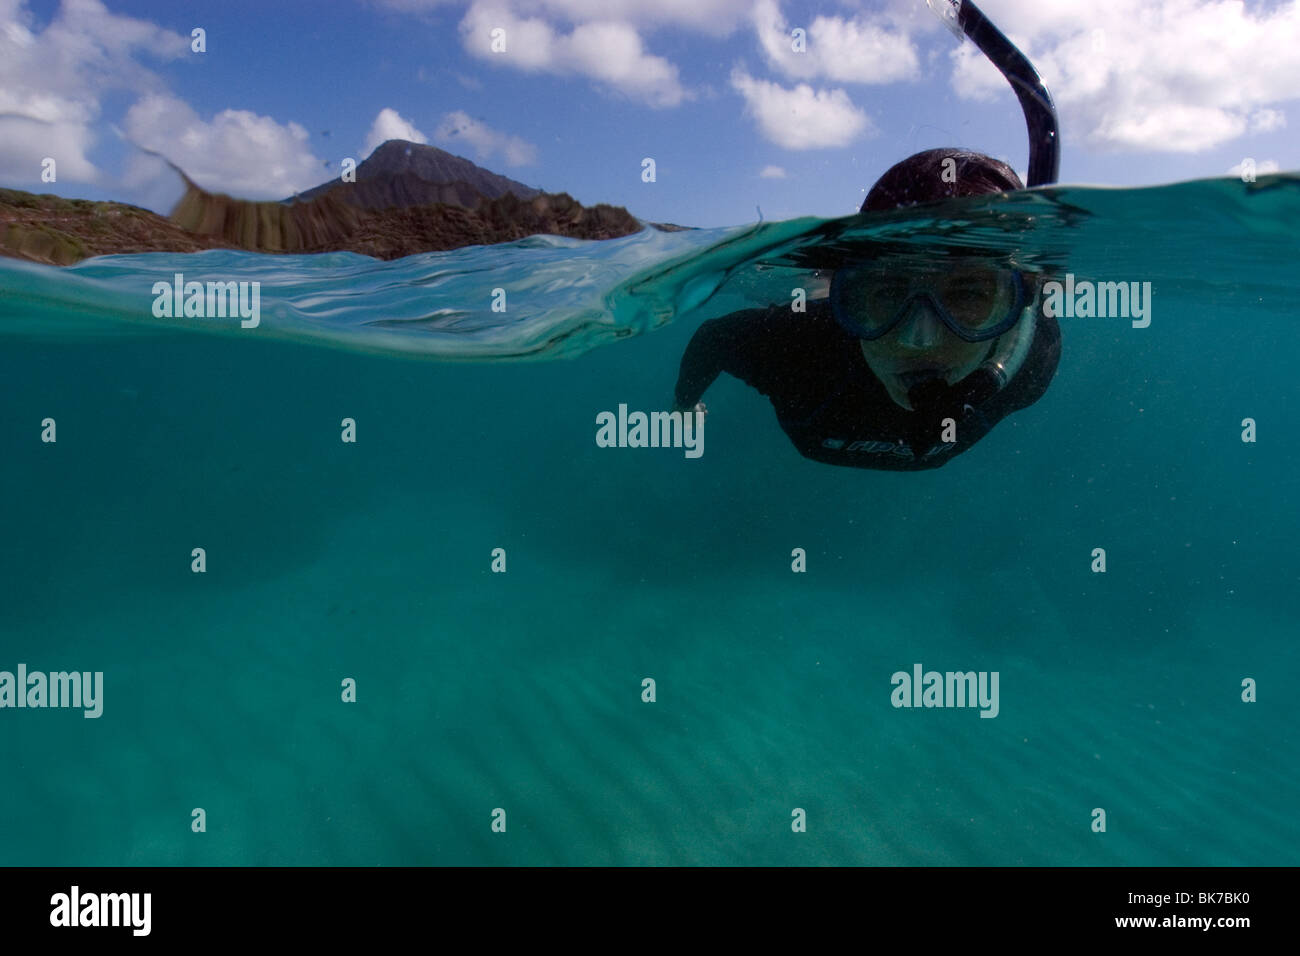 Split image of snorkeler hovering over sandy substrate, Hanauma Bay, Oahu, Hawaii Stock Photo